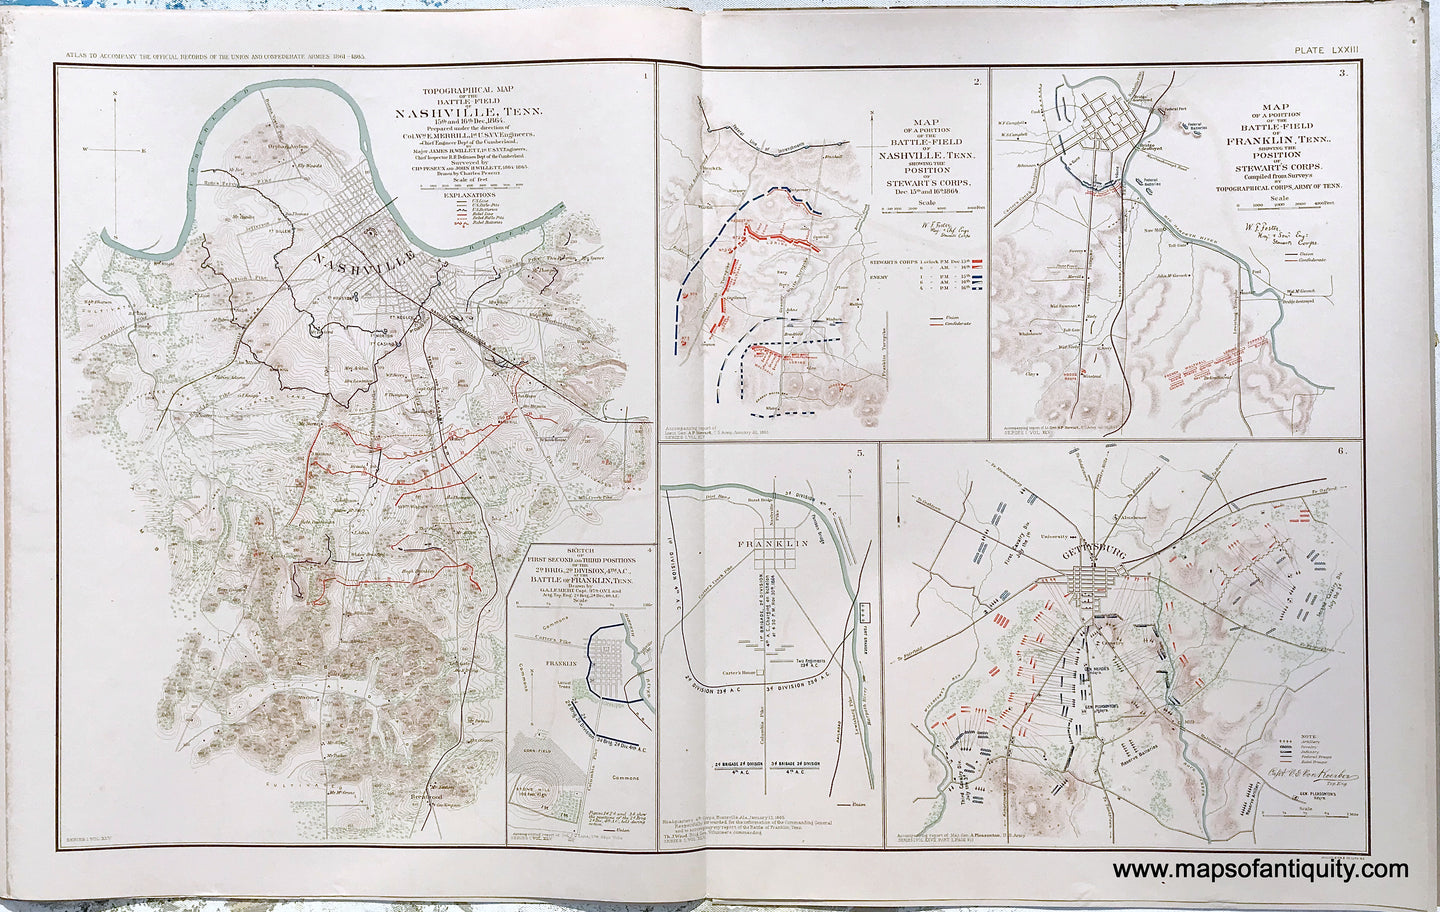 Antique-Lithograph-Print-Plate-73.-Battle-Field-of-Nashville-Tenn.-15th-and-16th-December-1864-/-Battle-Field-of-Nashville-Tenn.-showing-the-positions-of-Stewart's-Corps-December-15th-and-16th-1864-/-Battle-Field-of-Franklin-Tenn.-/-two-small-maps-of-Franklin-Tenn.-/-Gettysburg.-1893-US-War-Dept.-Civil-War-Civil-War-1800s-19th-century-Maps-of-Antiquity